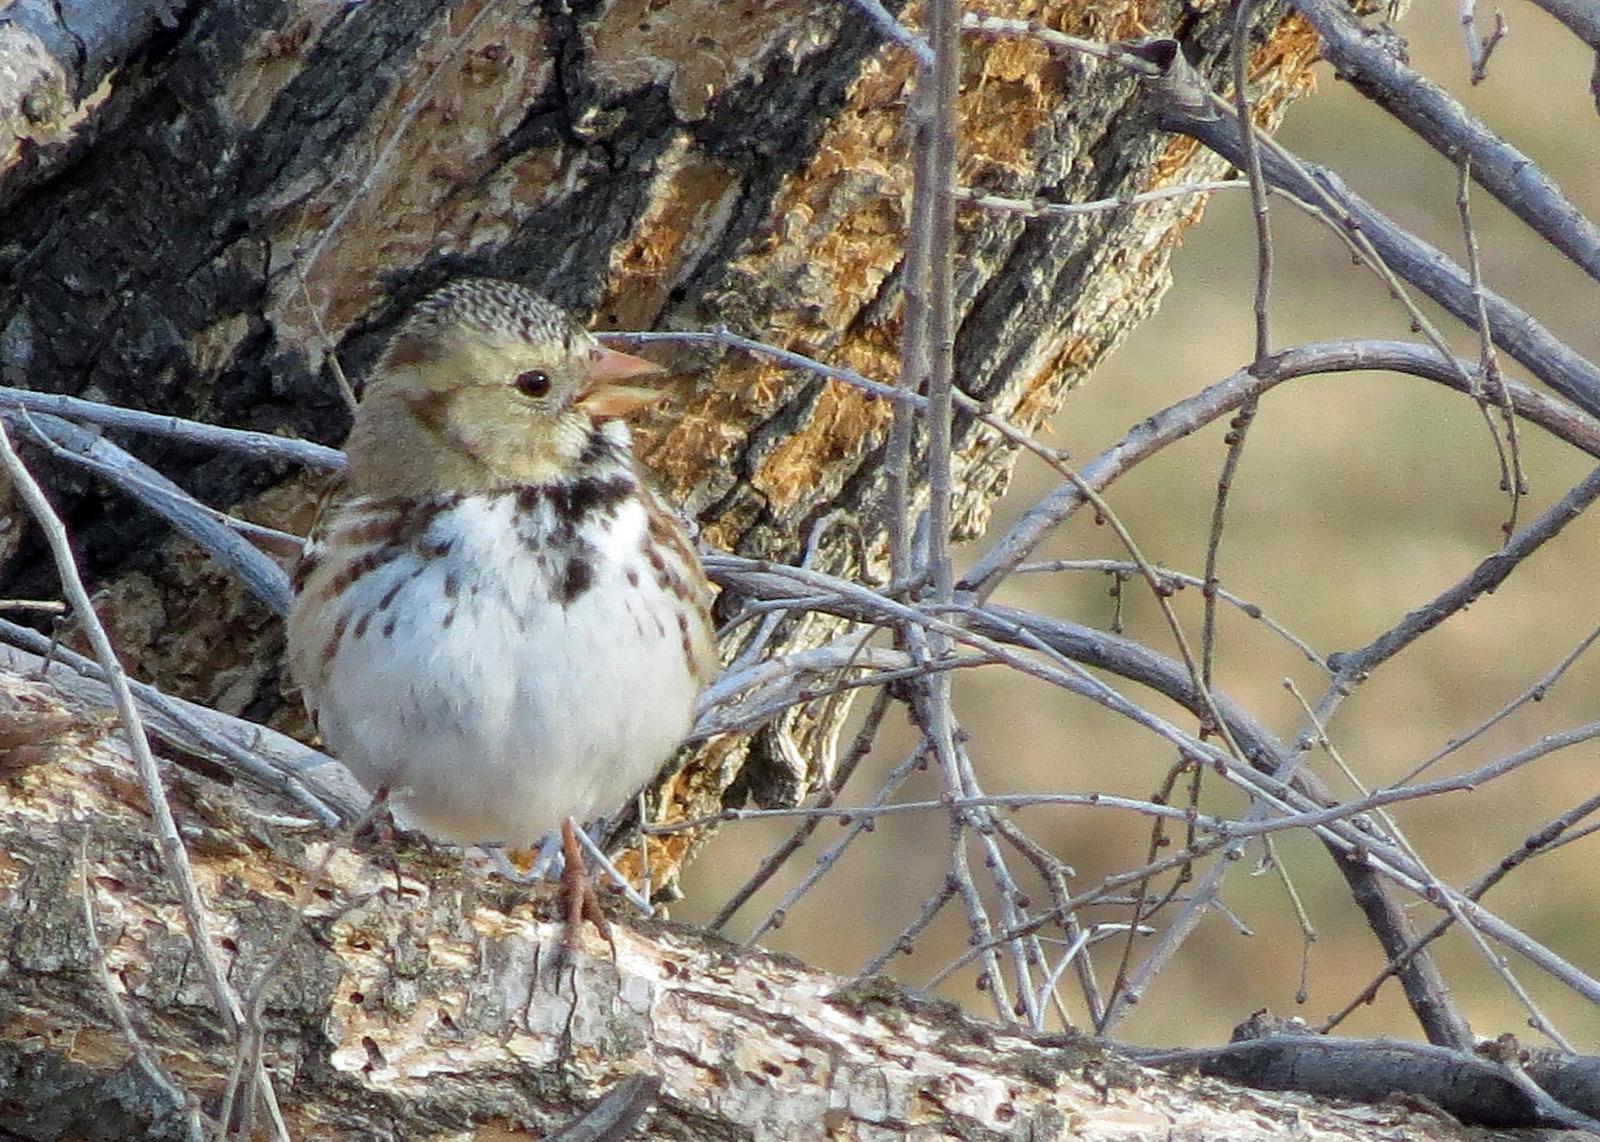 Harris's Sparrow Photo by Kelly Preheim